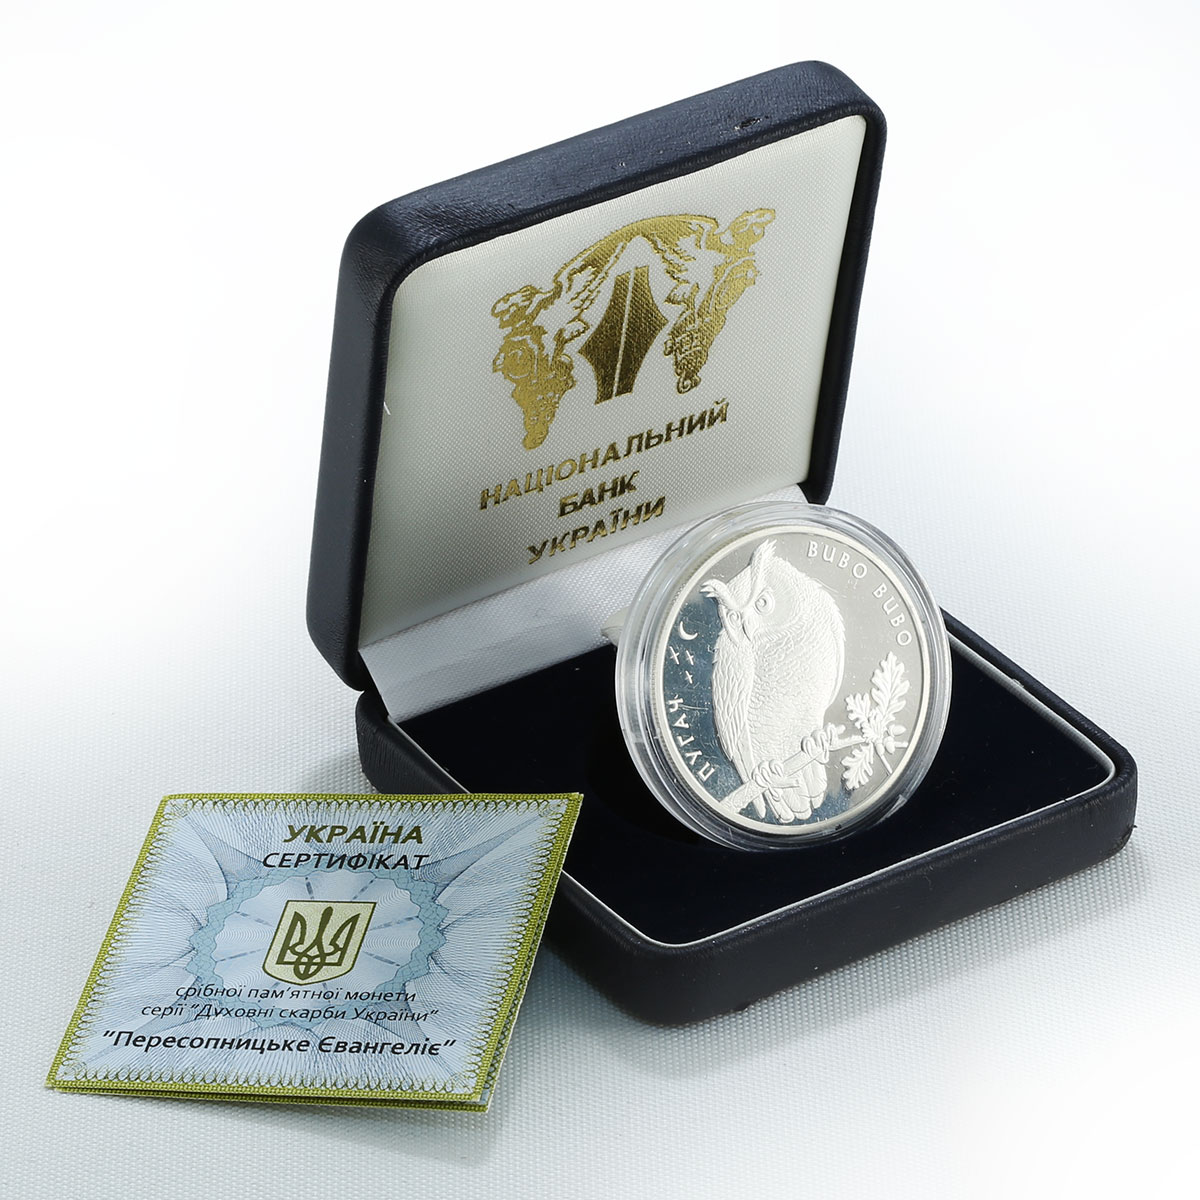 Ukraine 10 hryvnia Eagle Owl Bubo Bubo Fauna Endangered Species silver coin 2002